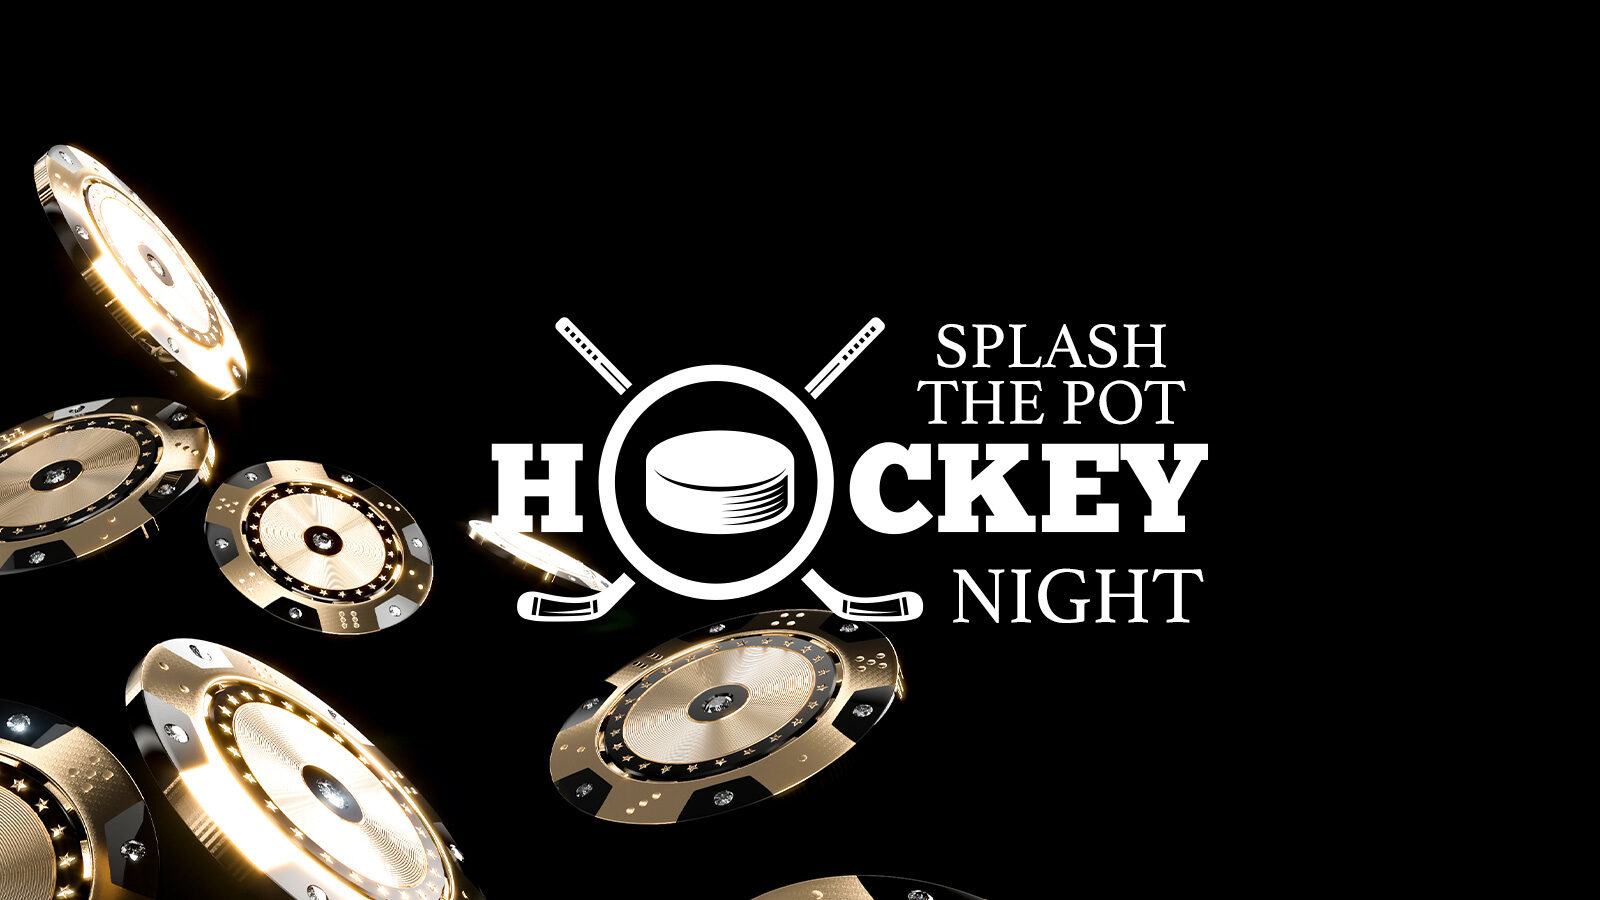 Hockey Night Splash The Pot